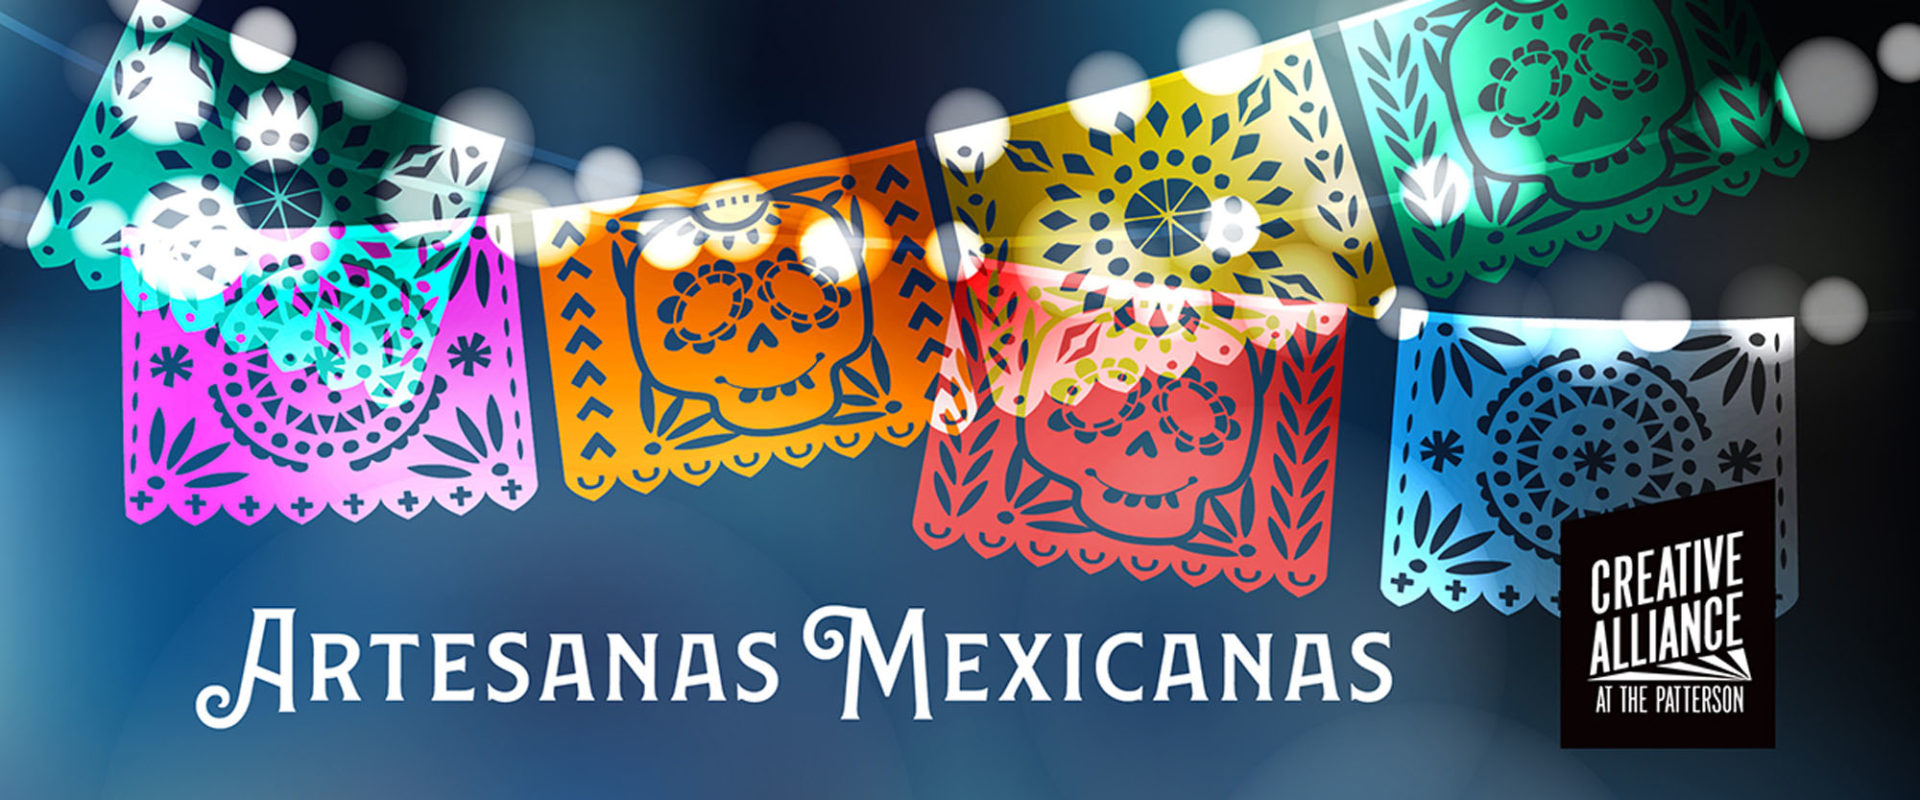 Creative Alliance | Artesanas Mexicanas